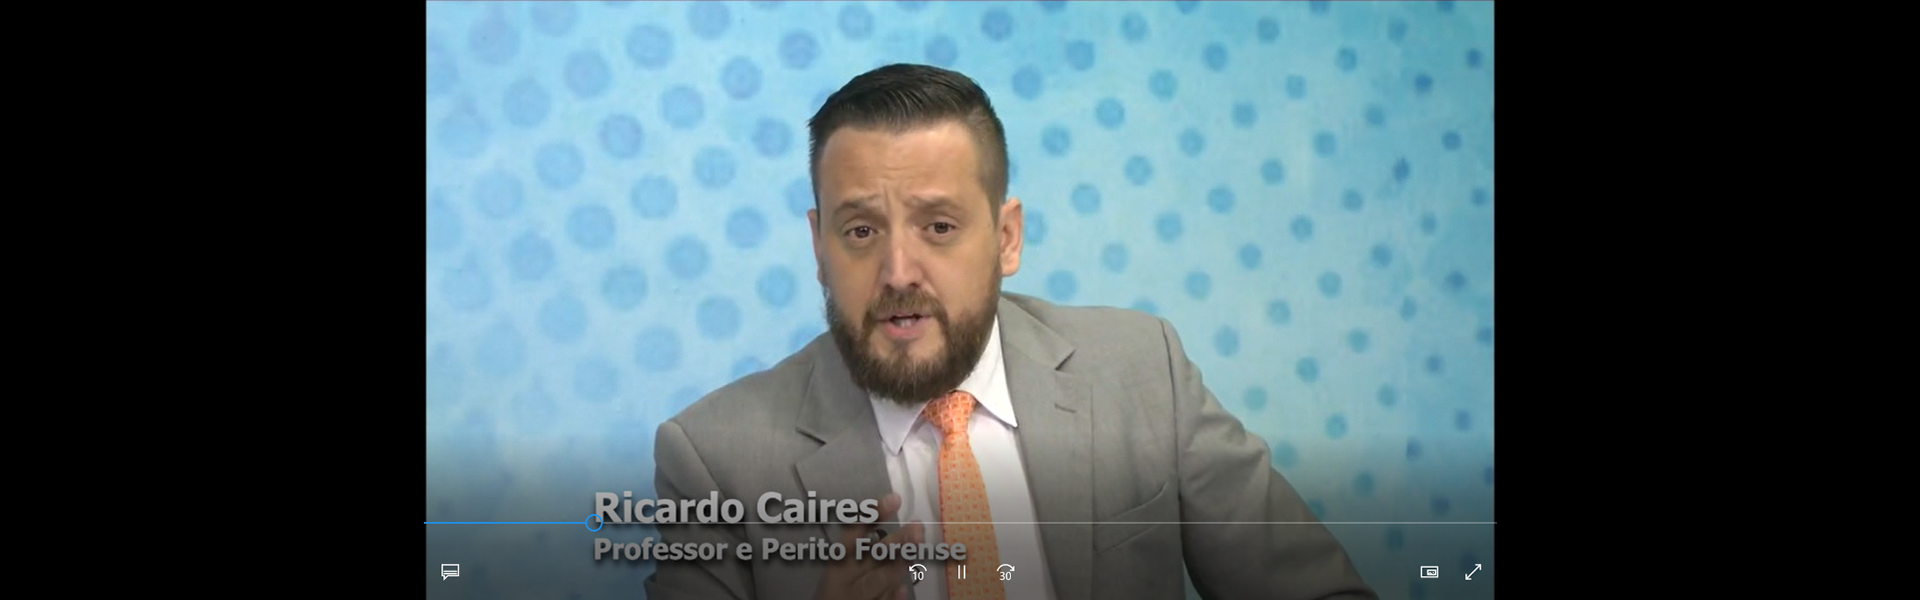 Rede globo mentiu sobre o perito Ricardo Caires dos Santos